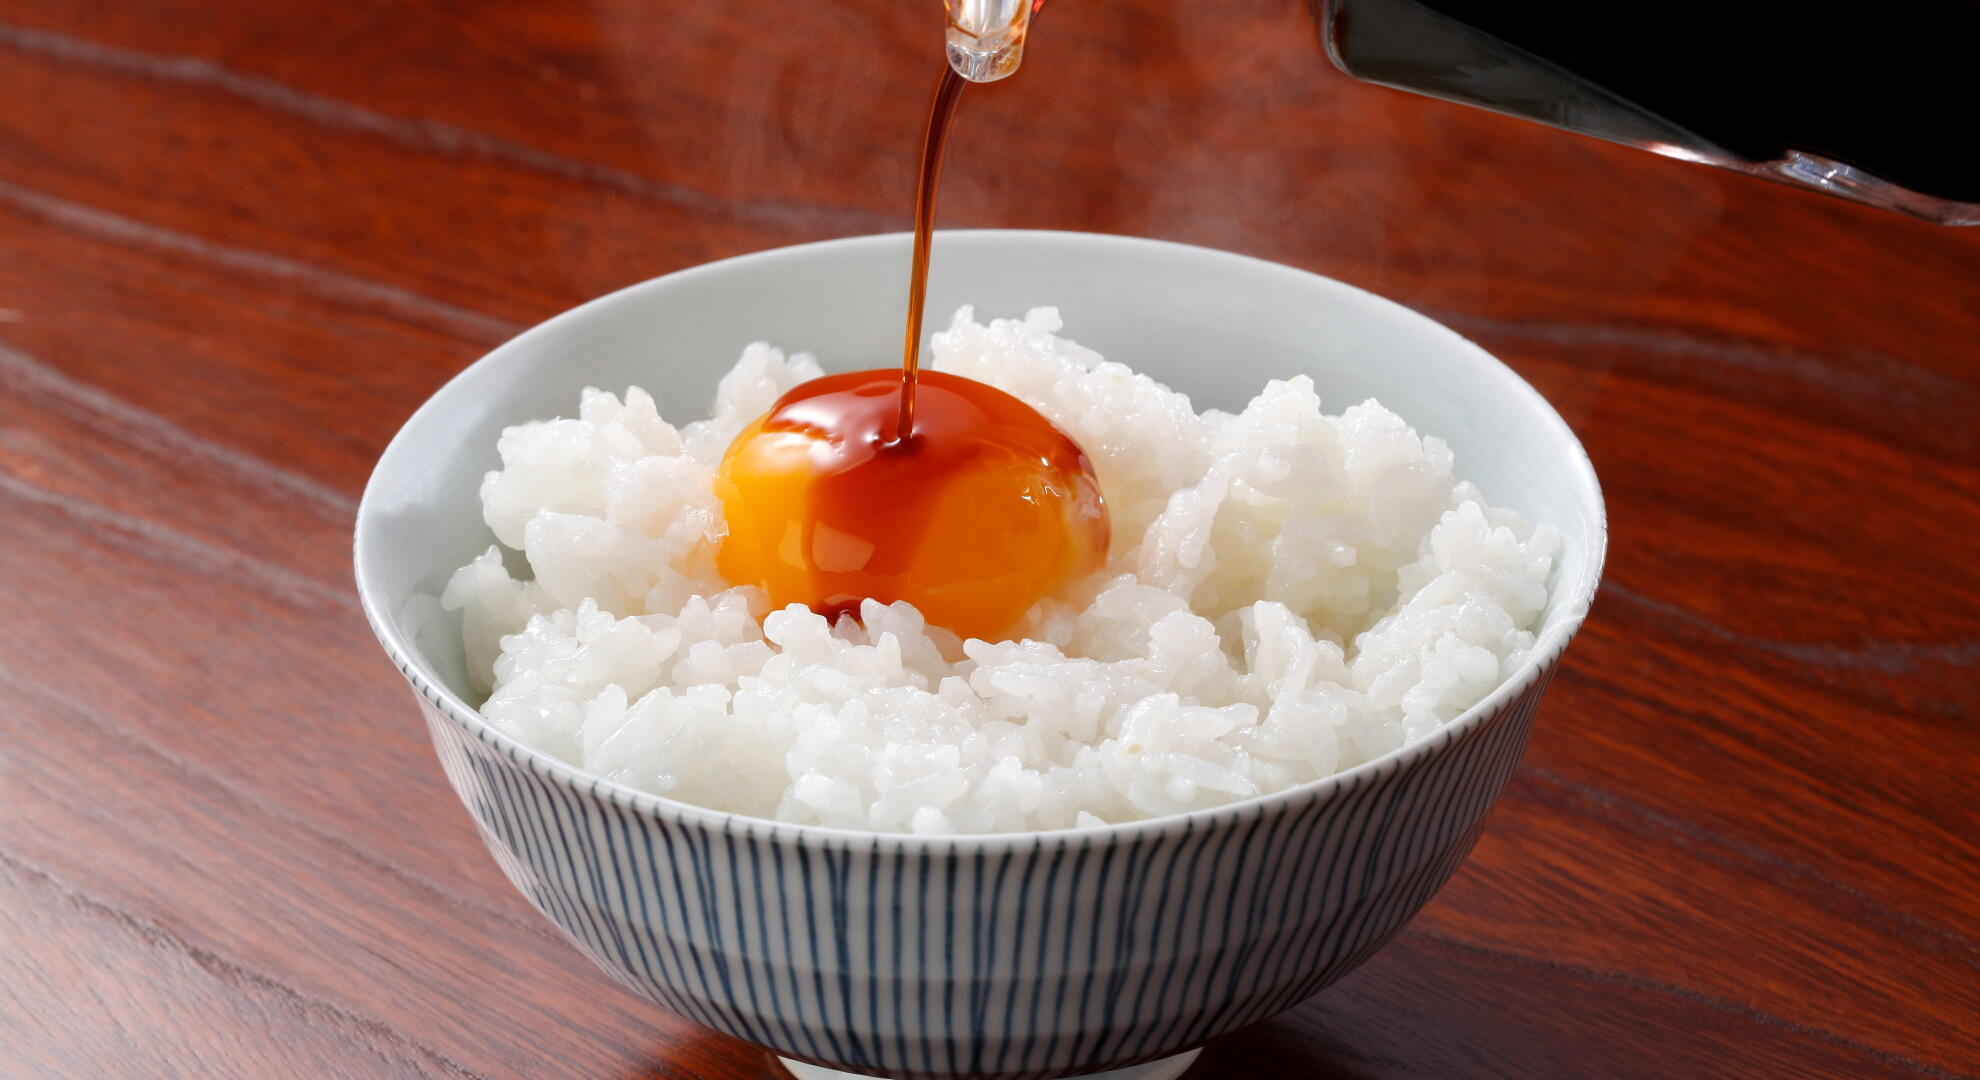 Enjoy raw egg over hot rice.